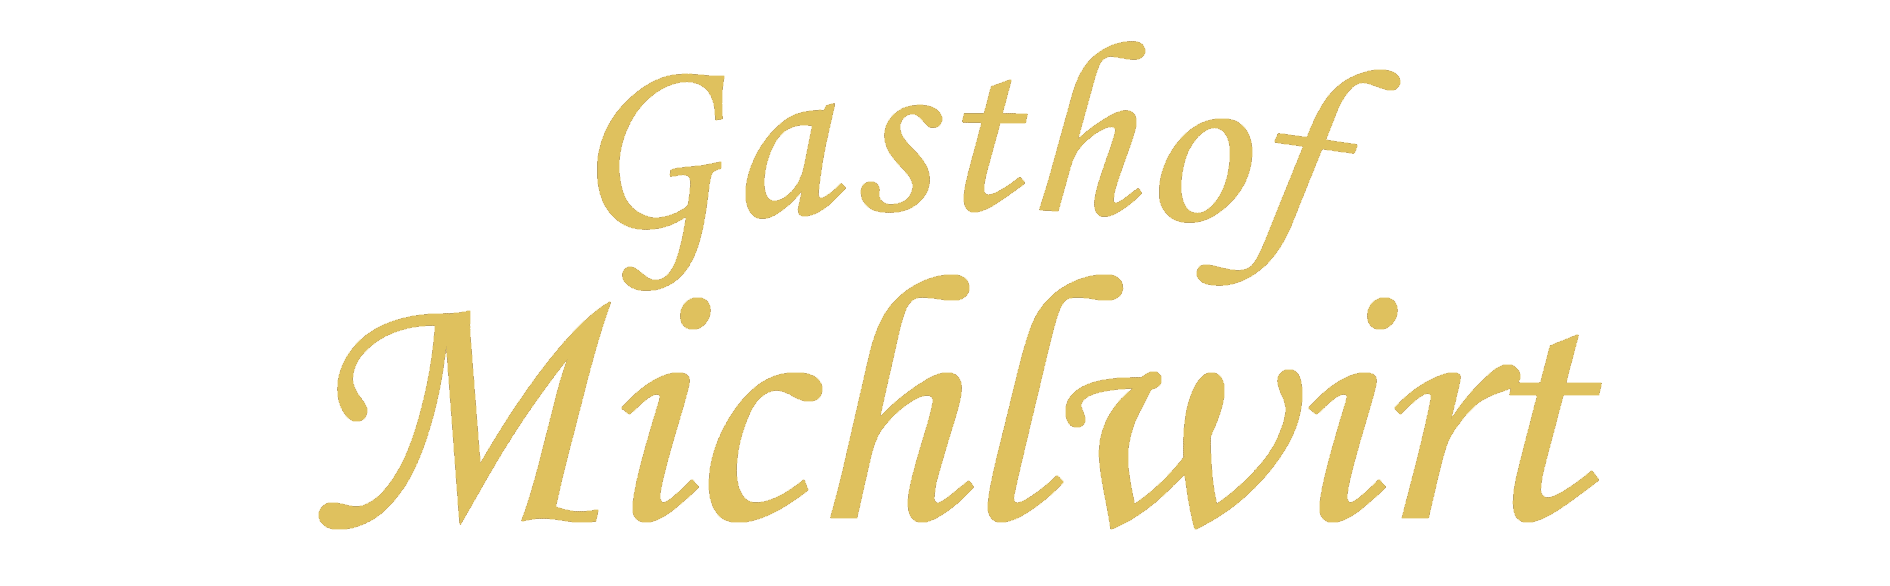 Gasthof Michlwirt Logo